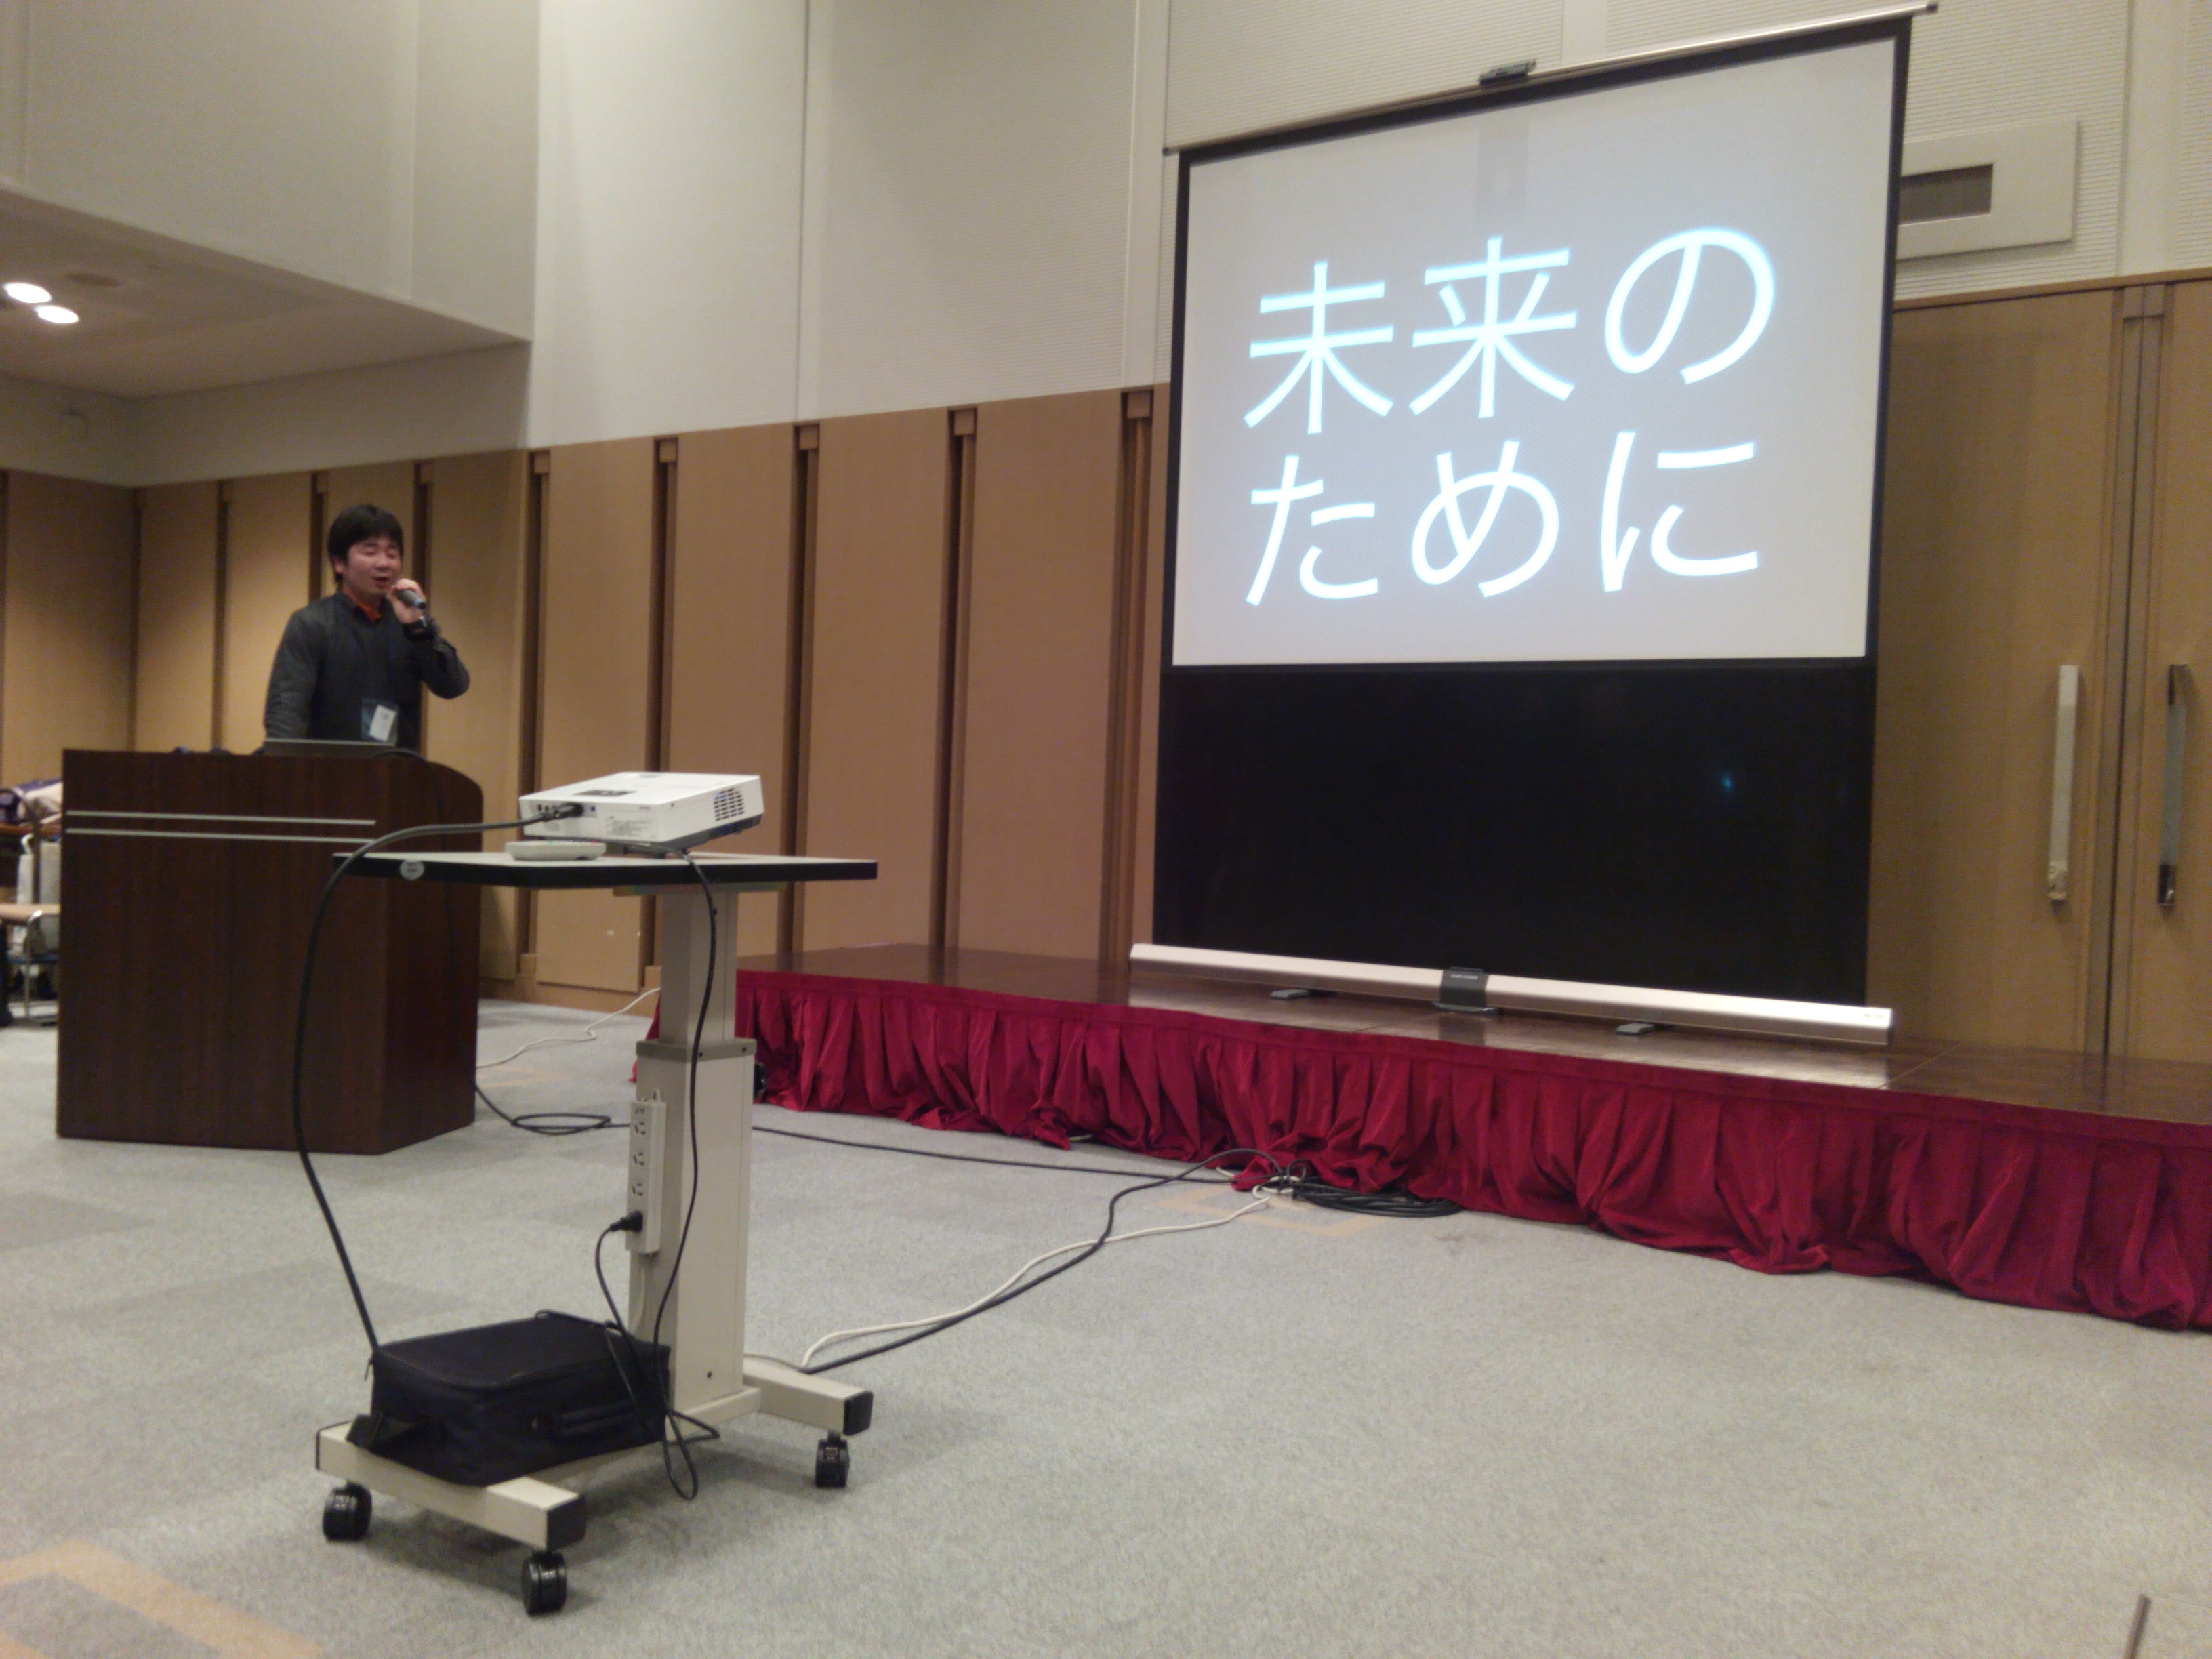 FUKUOKA MEETUP COMMUNITY Presentations